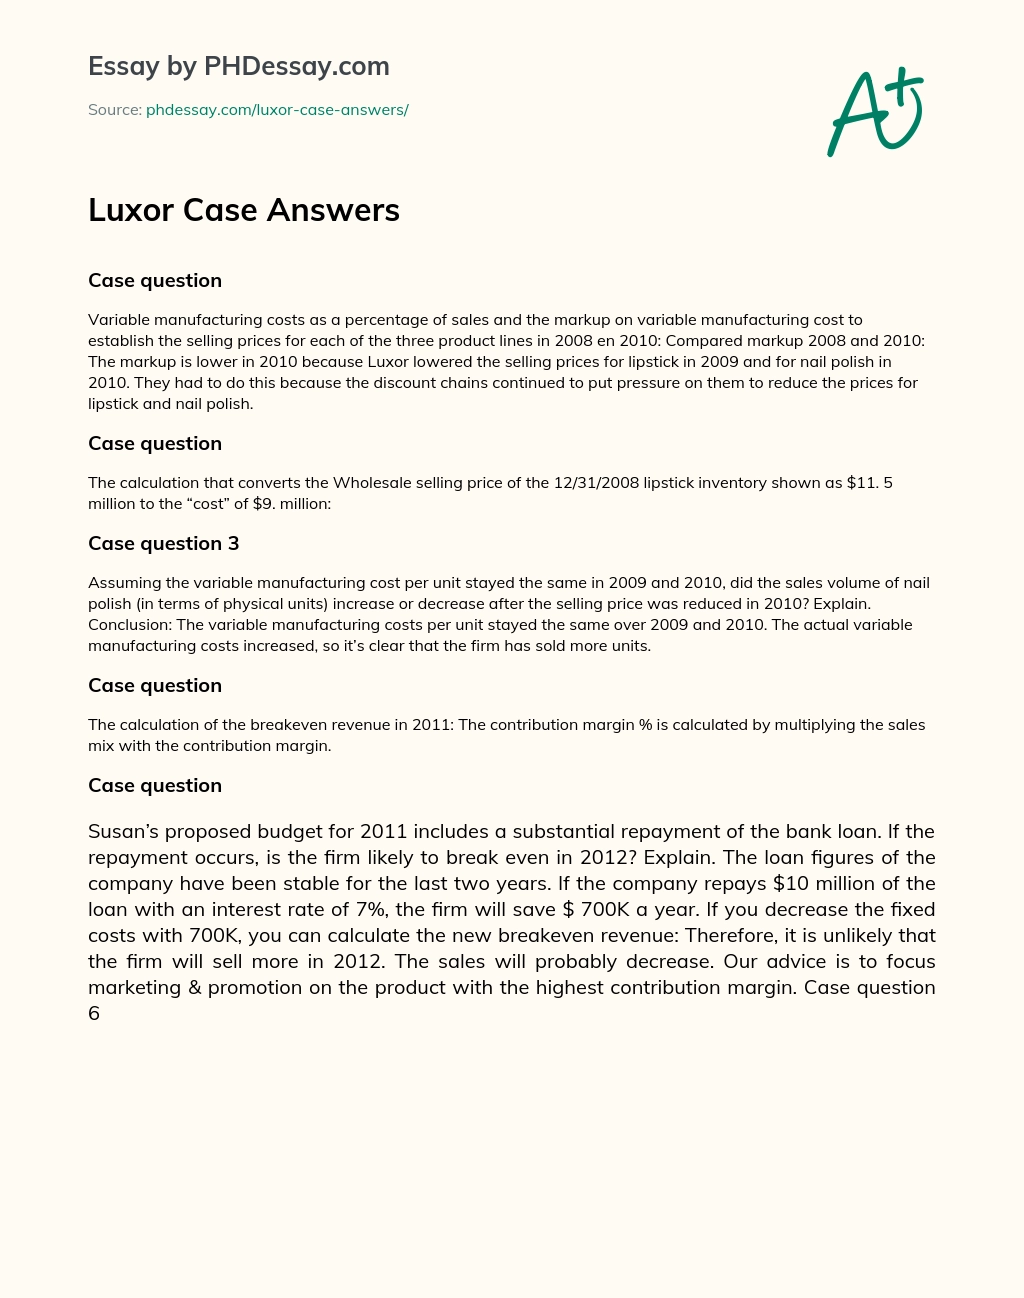 Luxor Case Answers essay